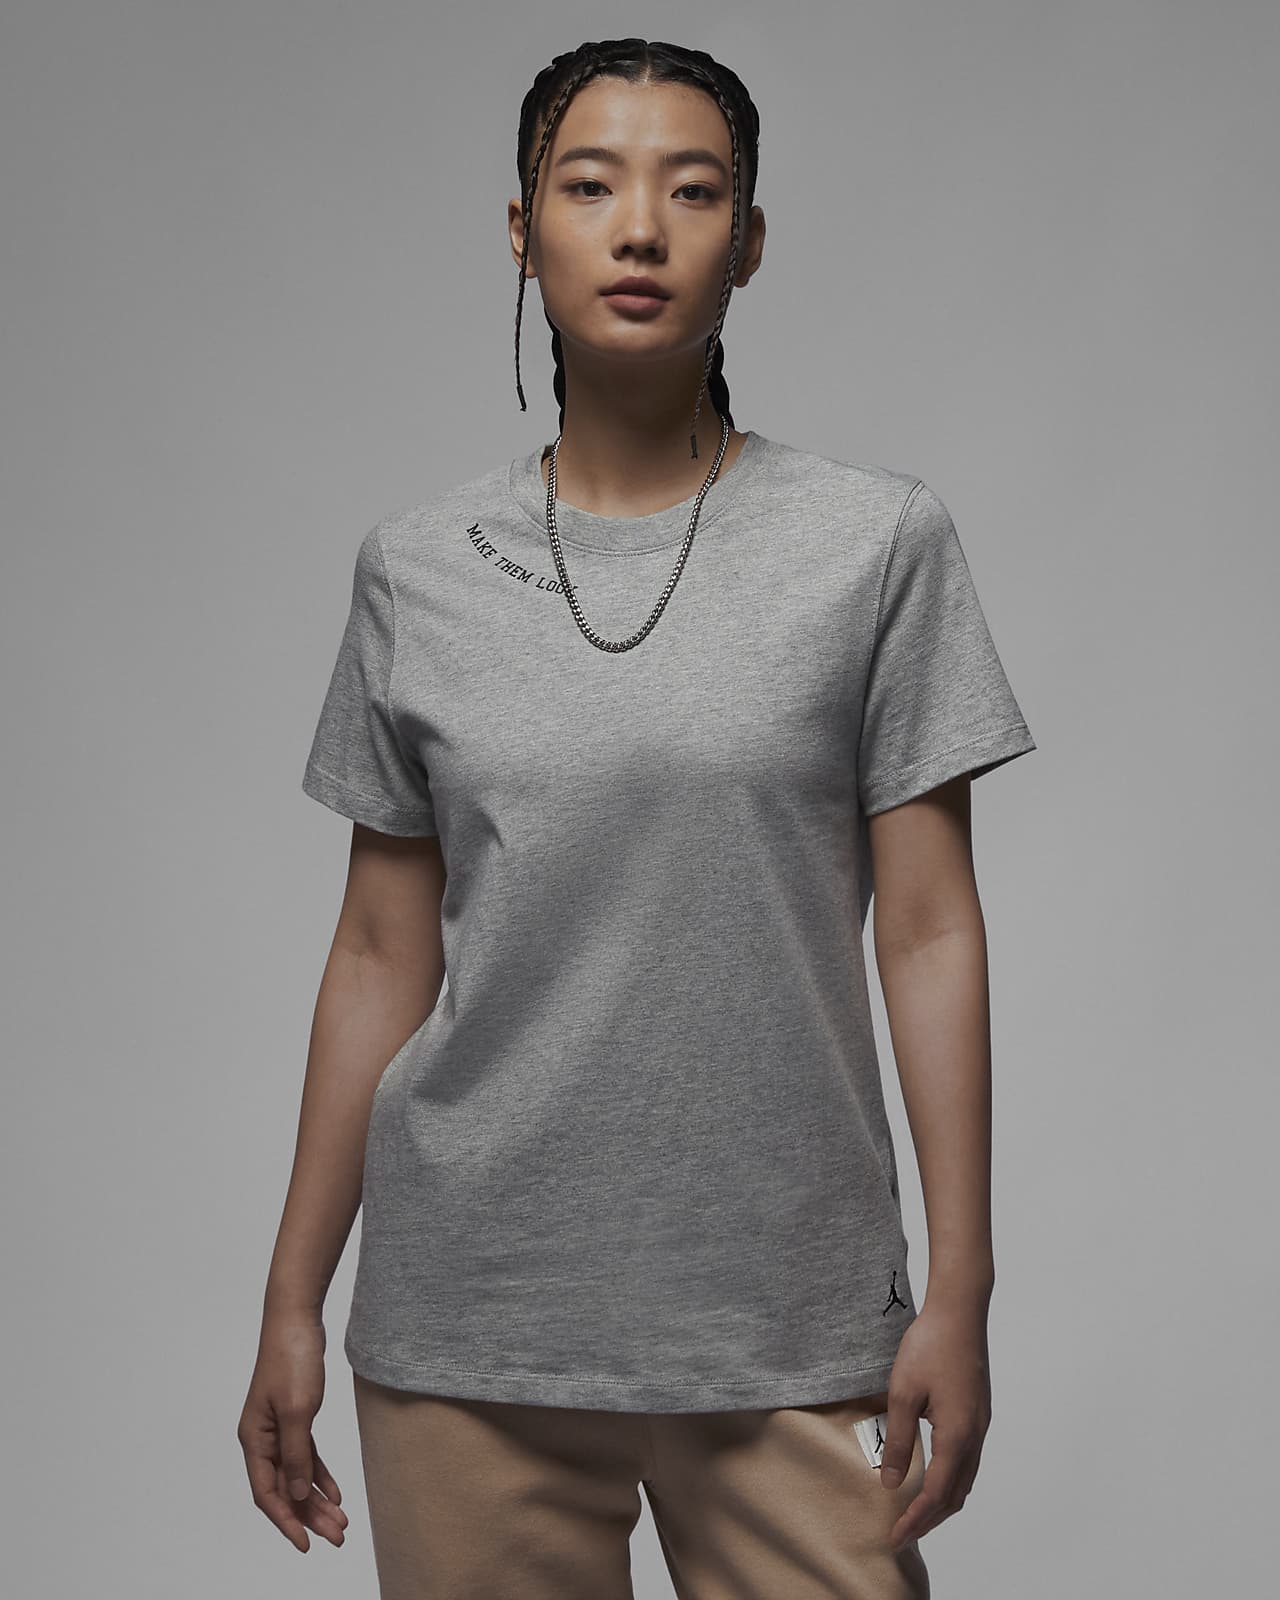 Jordan Women'S T-Shirt. Nike Vn